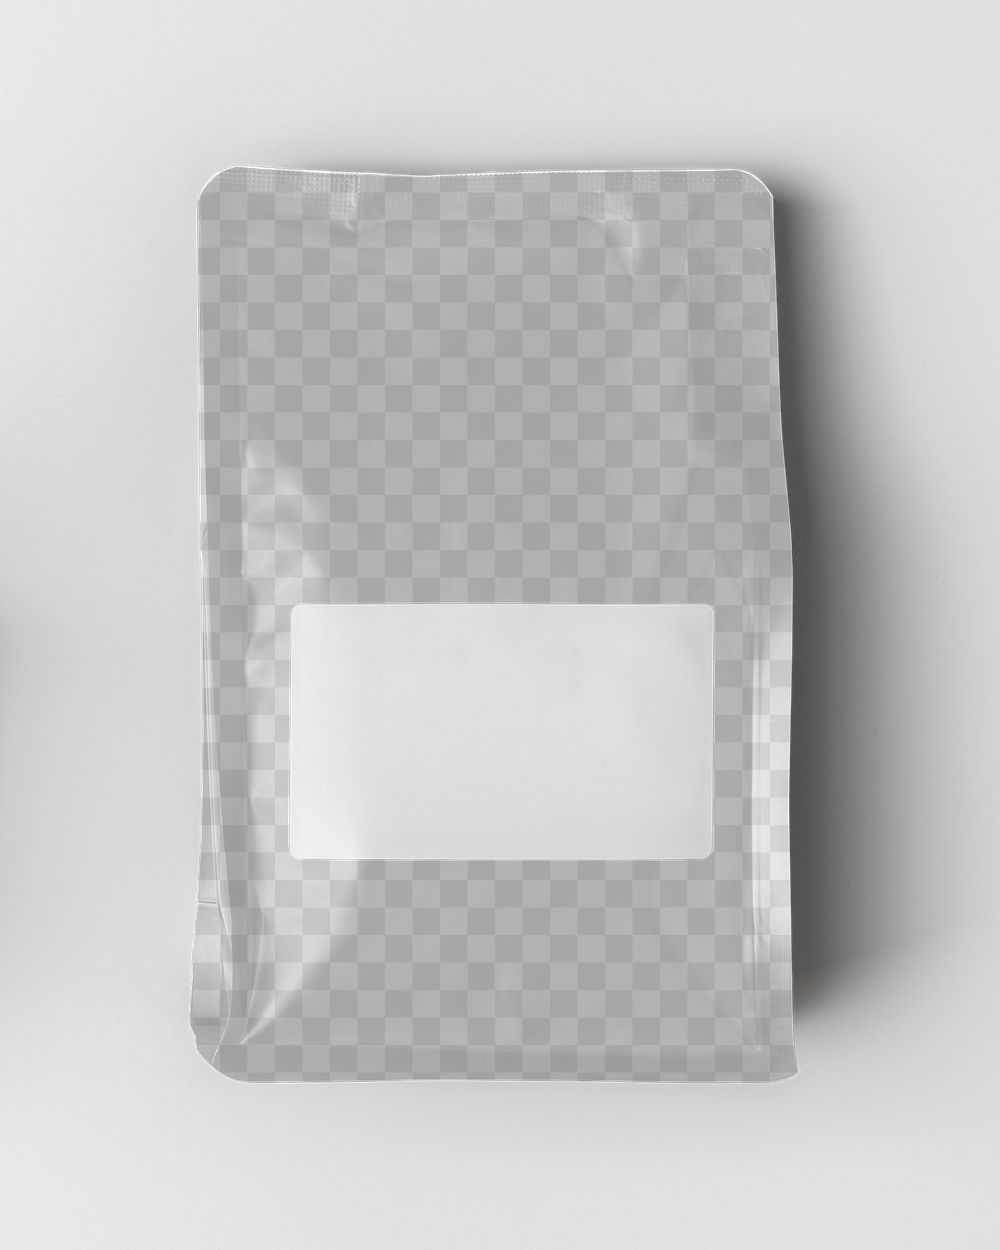 Transparent png, coffee bag mockup, blank label, product packaging design